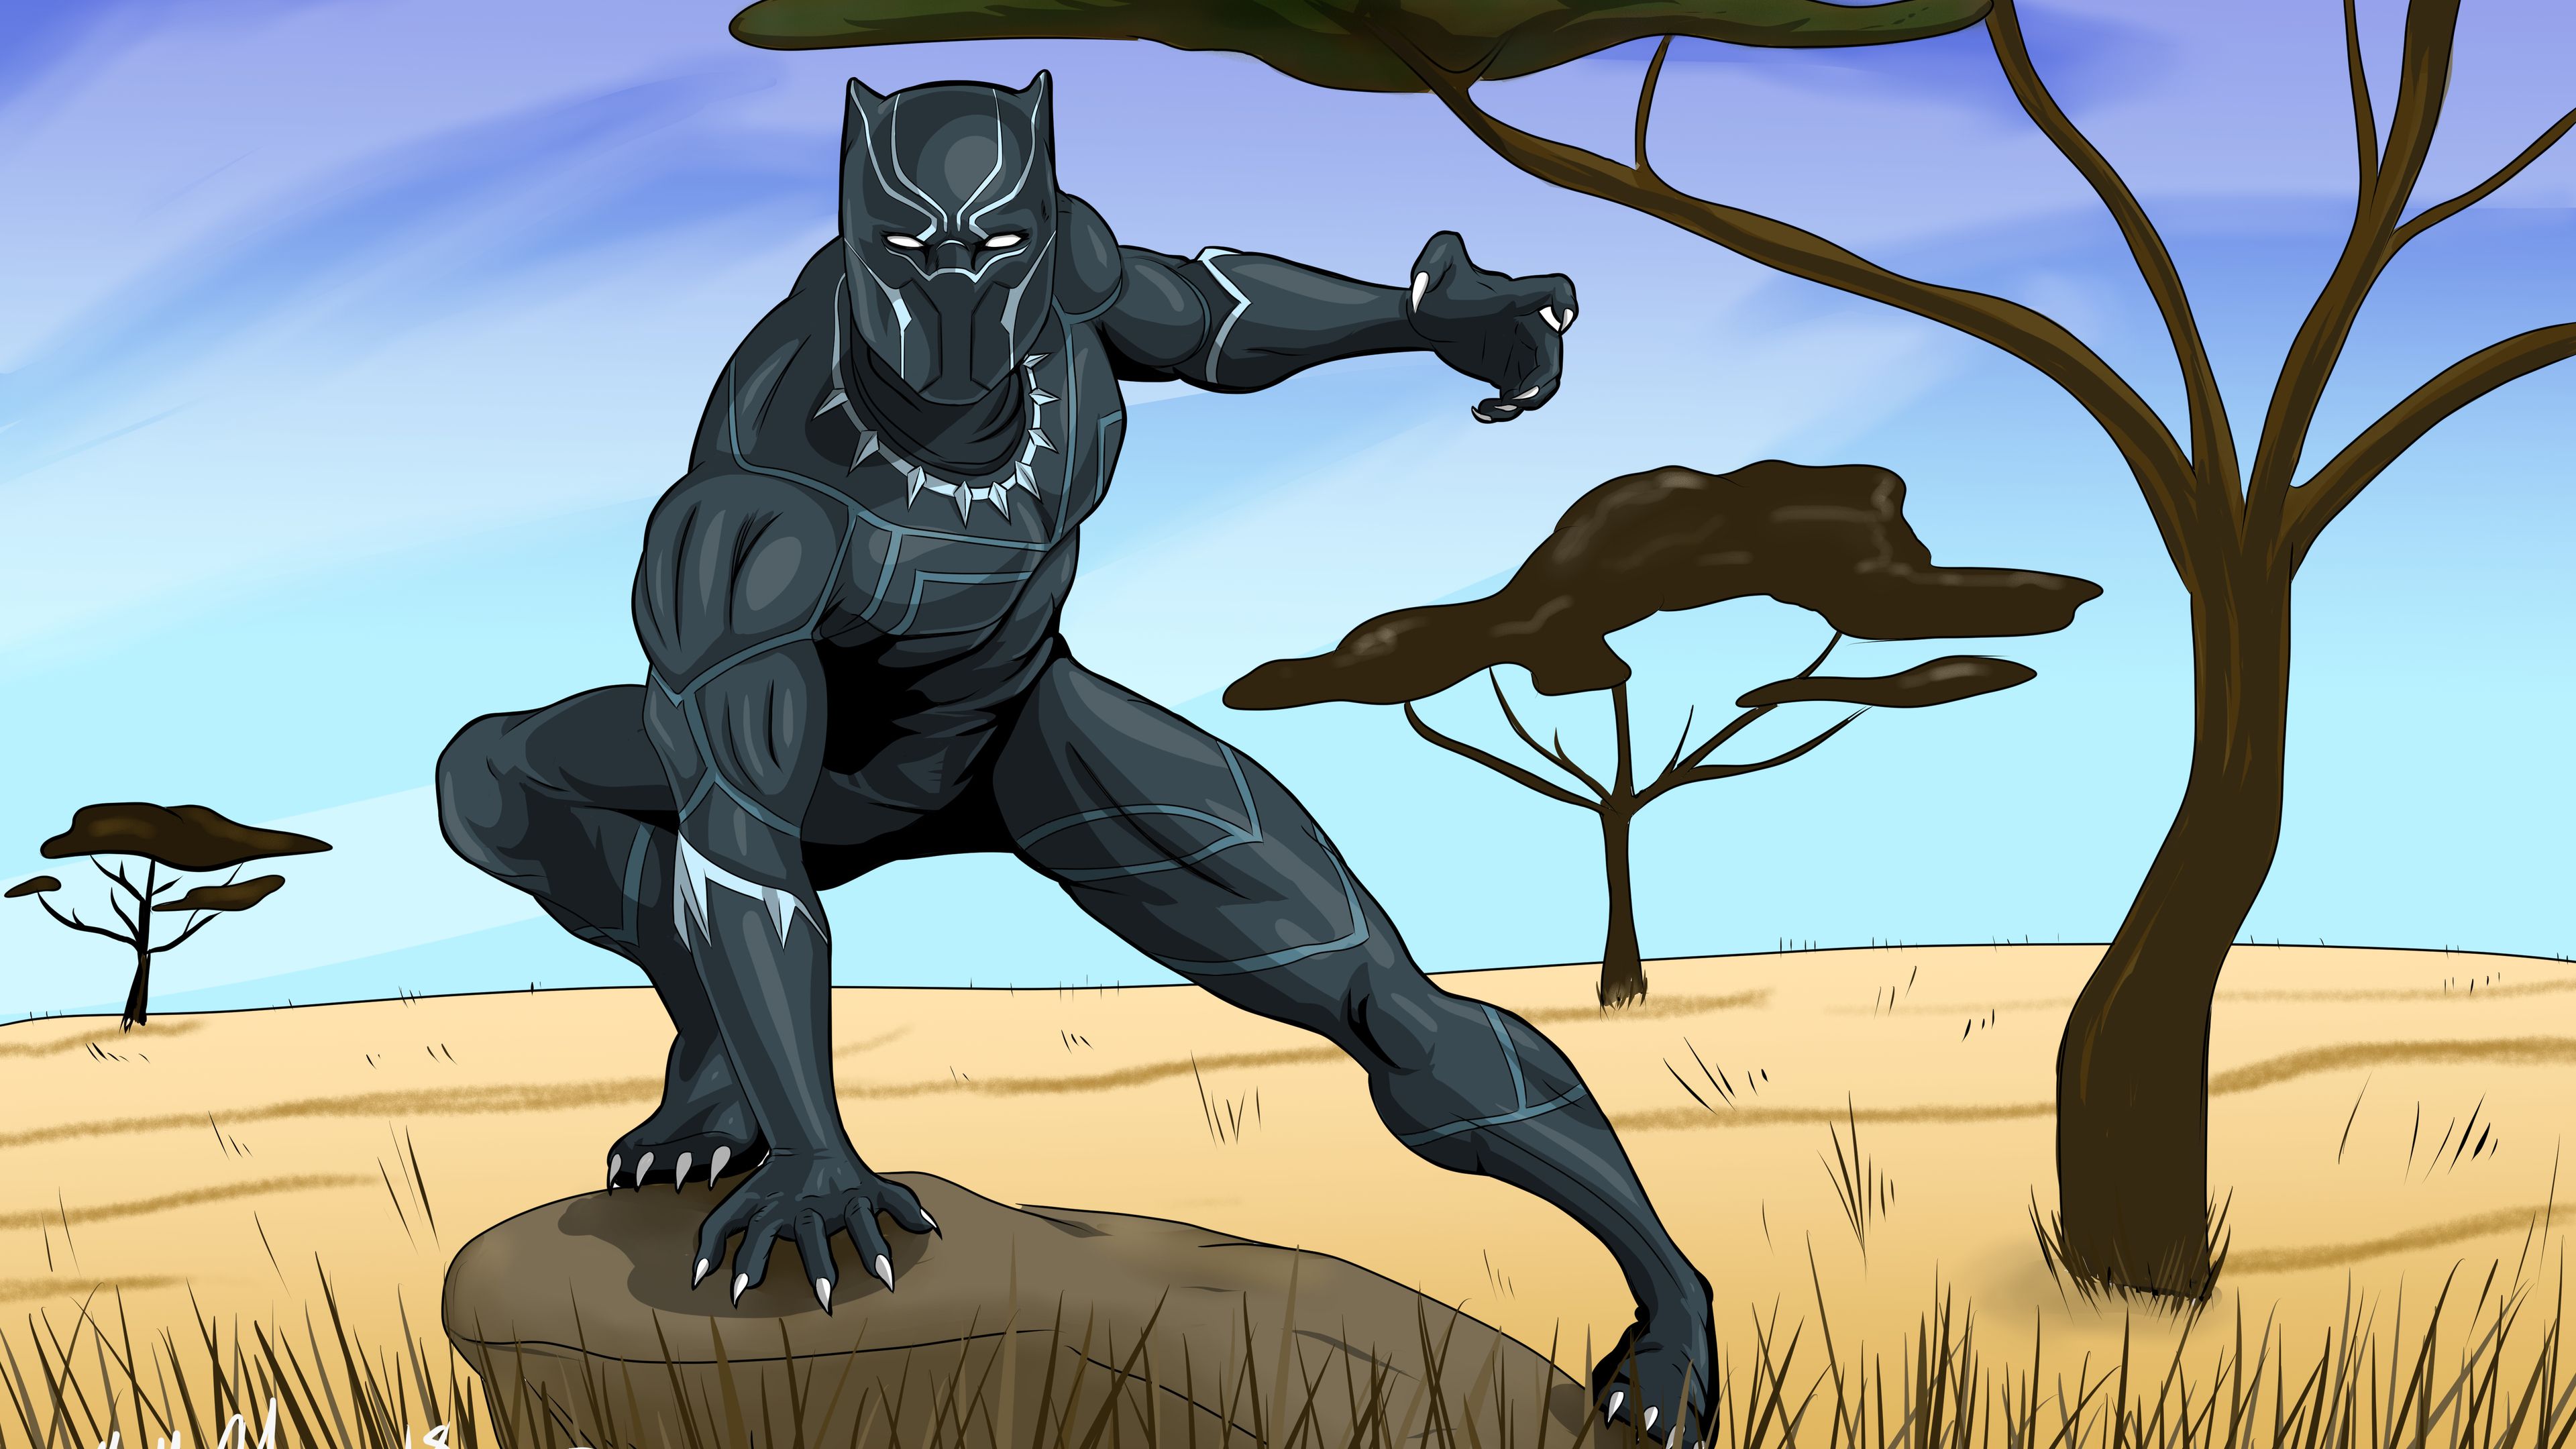 Black Panther 4K New Artwork Superheroes Wallpaper, Hd Wallpaper, Wallpaper, Black Panther Wallpaper, Artwor. Free Cartoons, Artwork, Black Panther